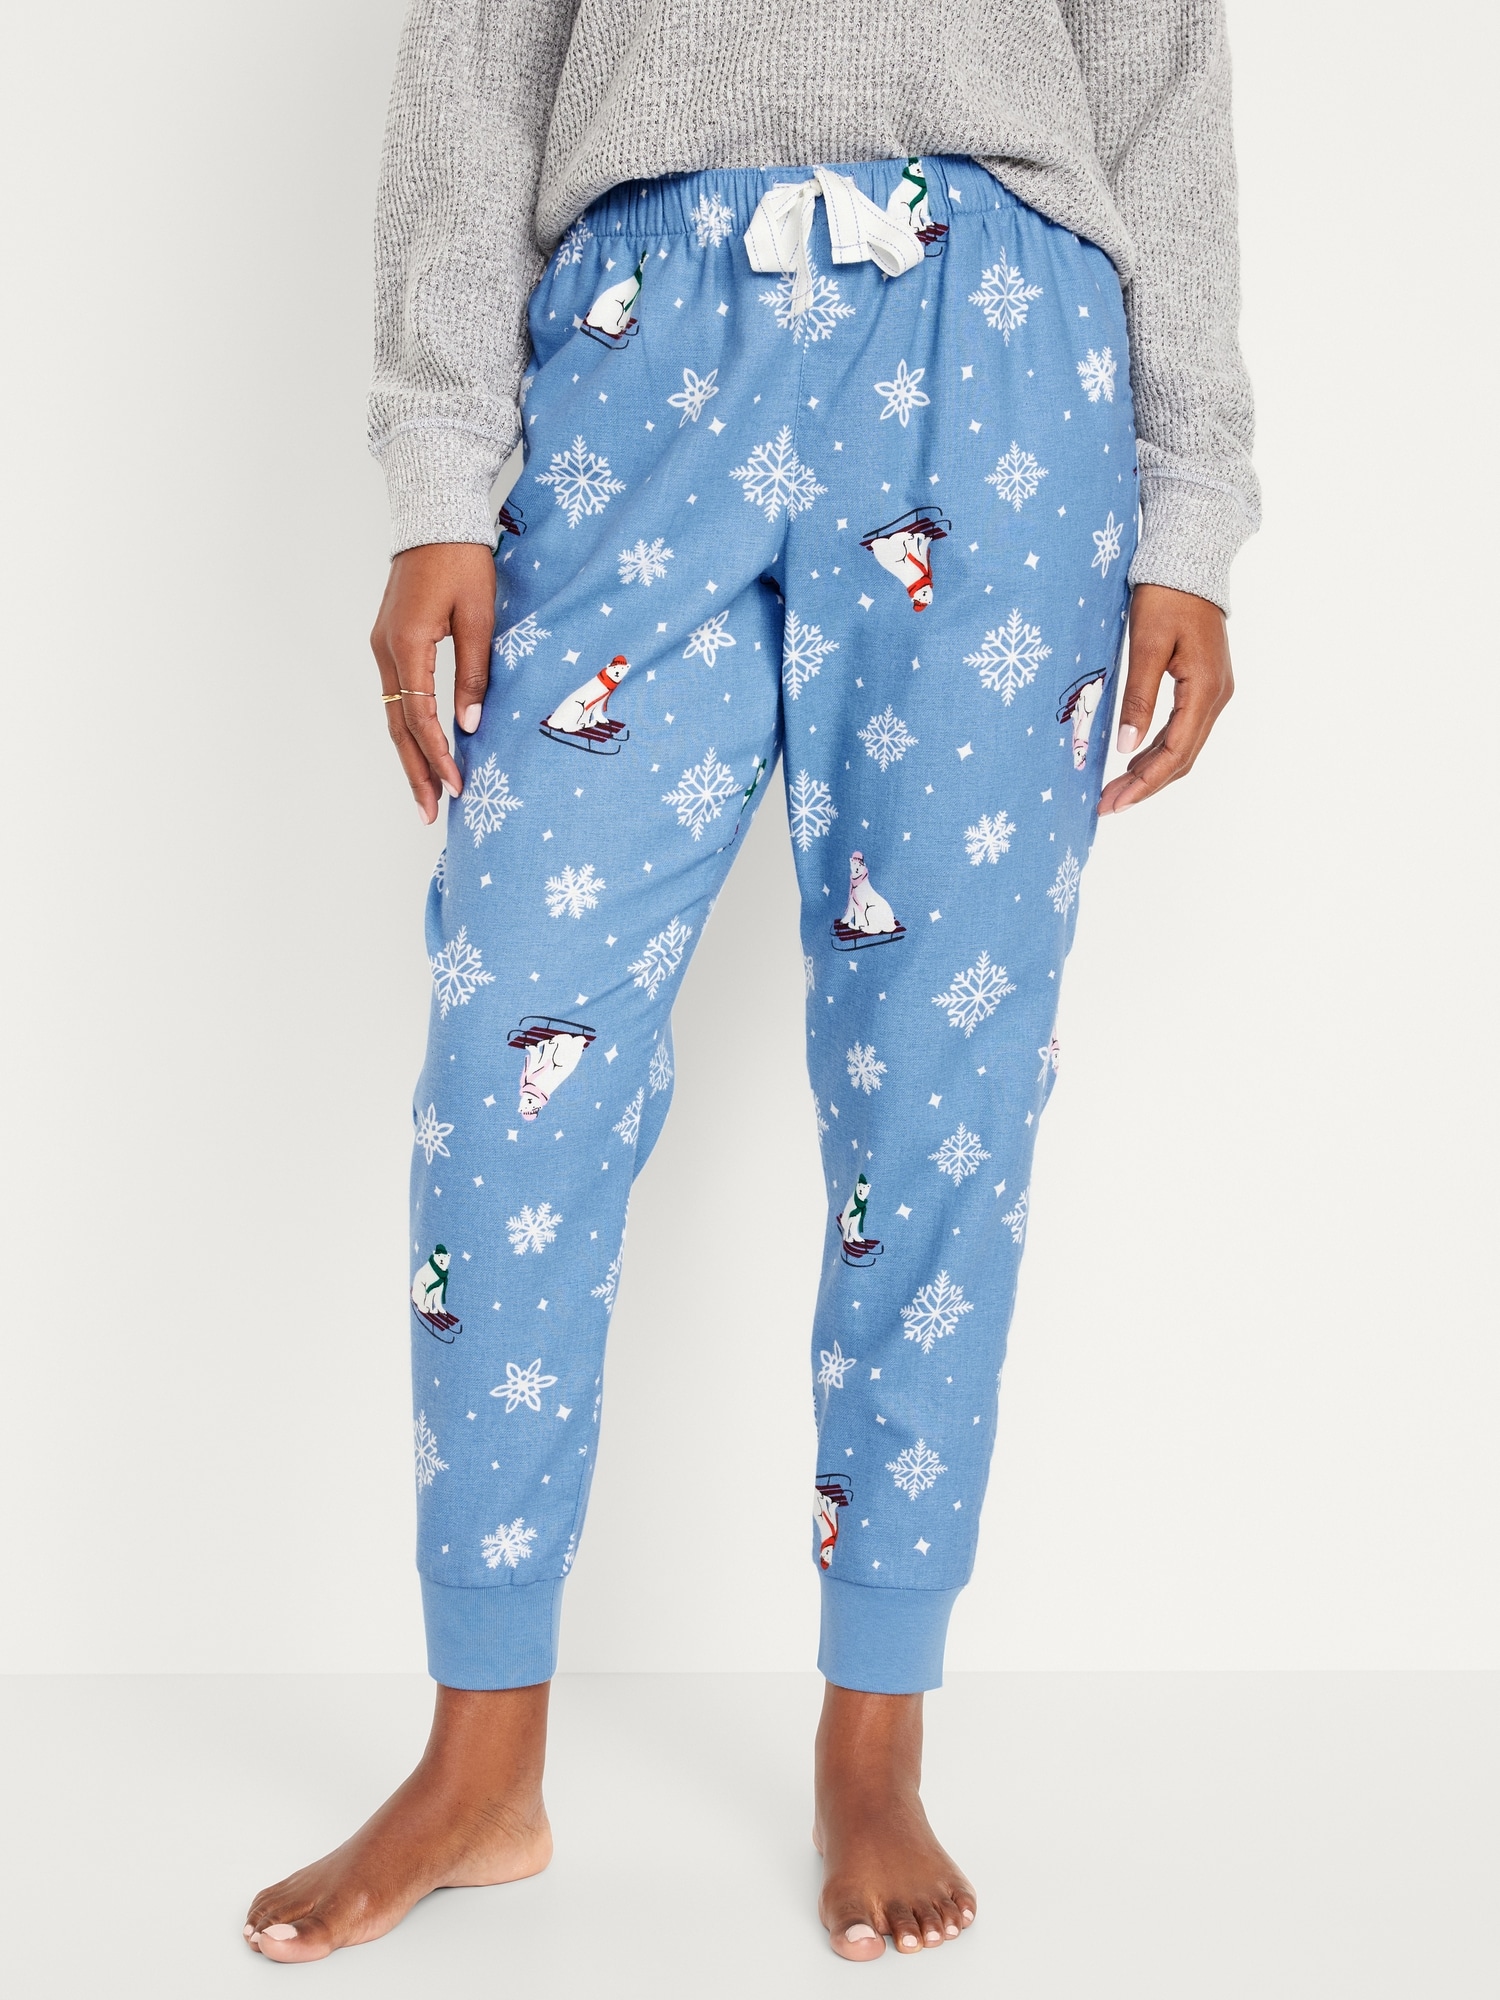 Women's Holiday Pajama Pants